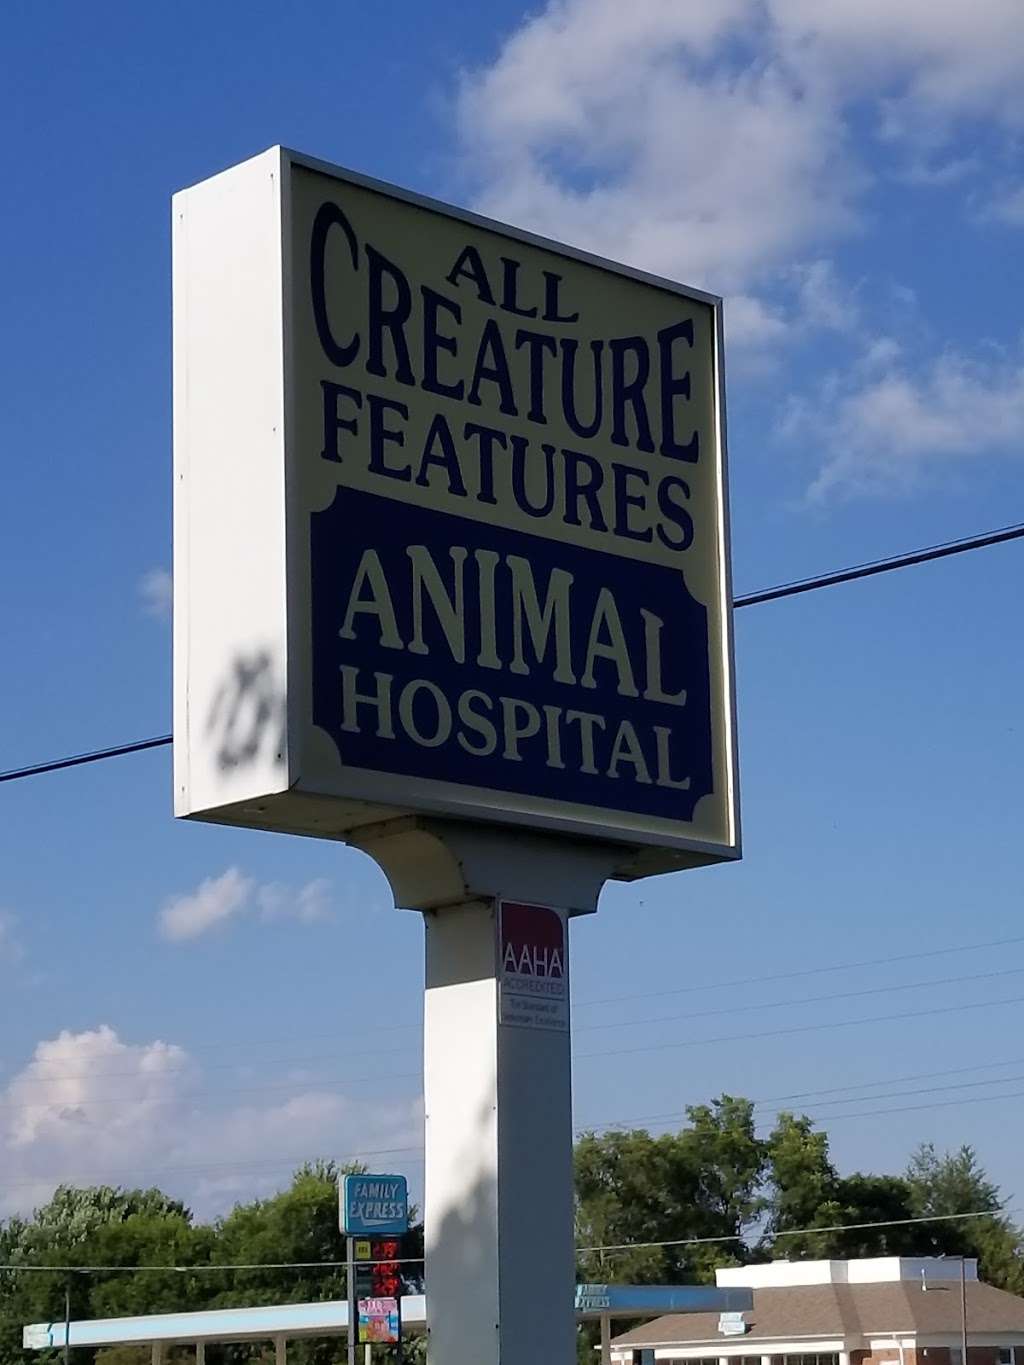 All Creature Features Animal Hospital | 4034 US-35, La Porte, IN 46350 | Phone: (219) 393-3558